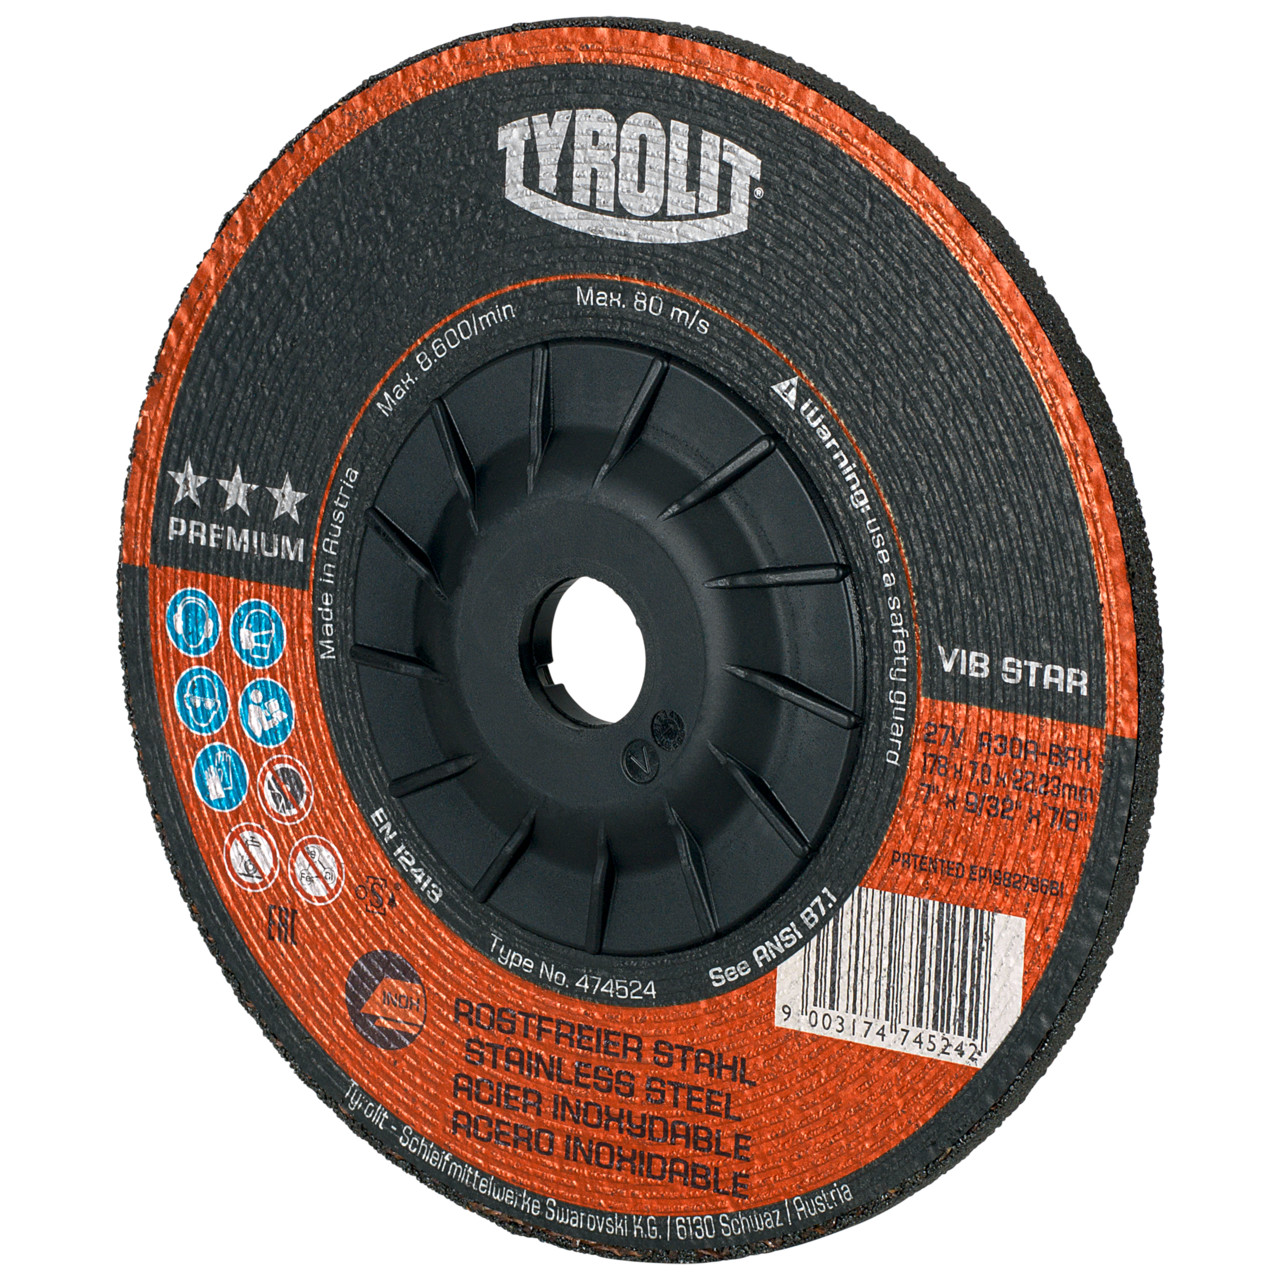 TYROLIT grinding wheel DxUxH 230x7x22.23 VIBSTAR for stainless steel, shape: 27 - offset version, Art. 474526